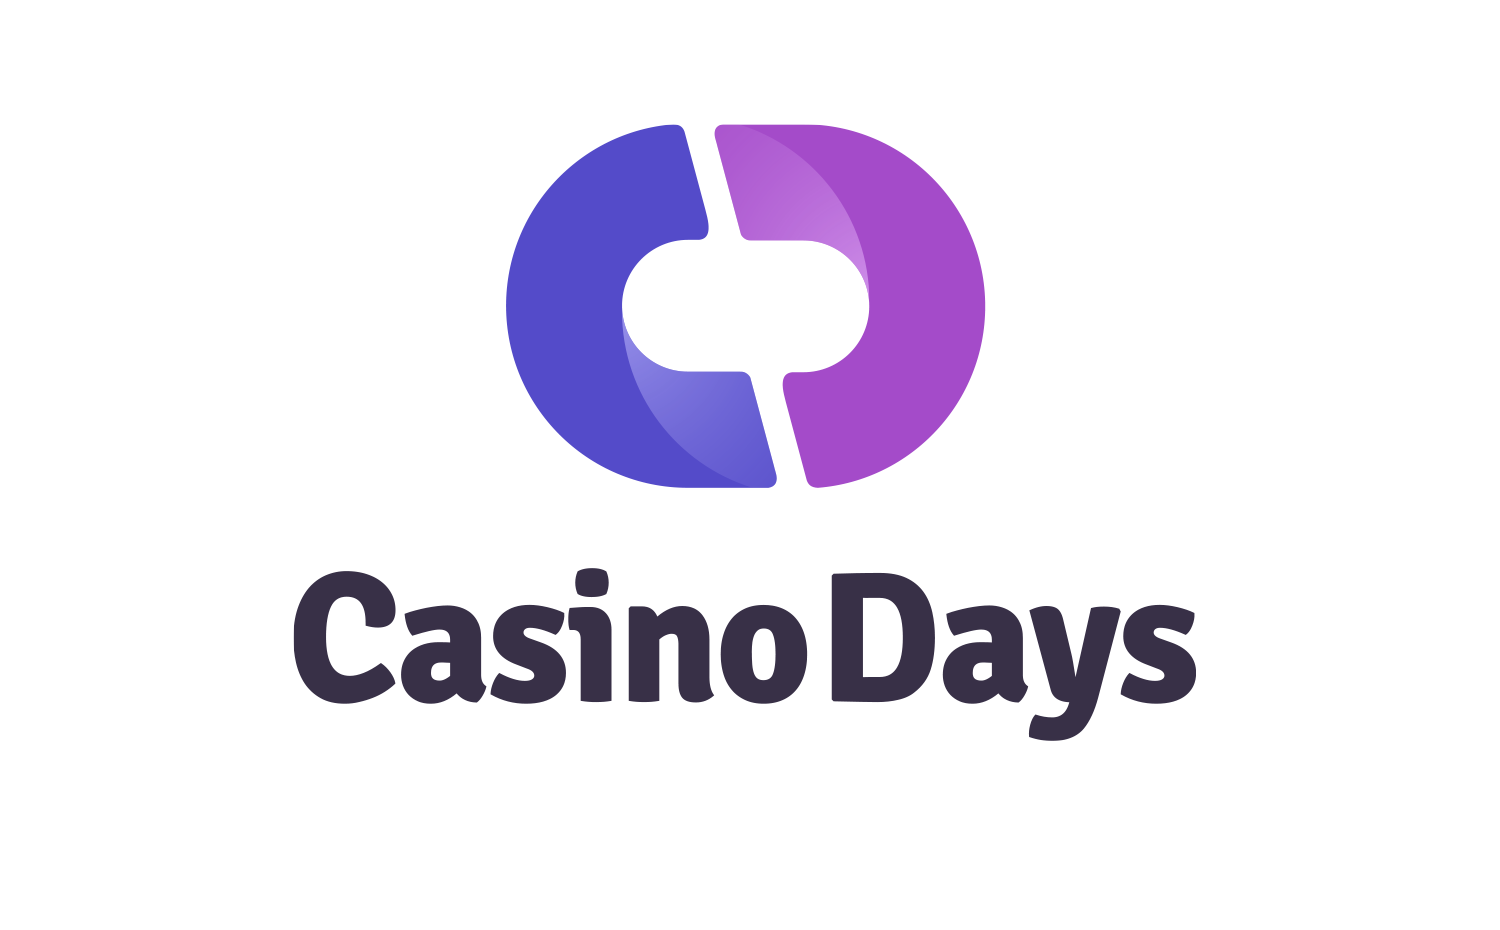 casino-days-logo.png